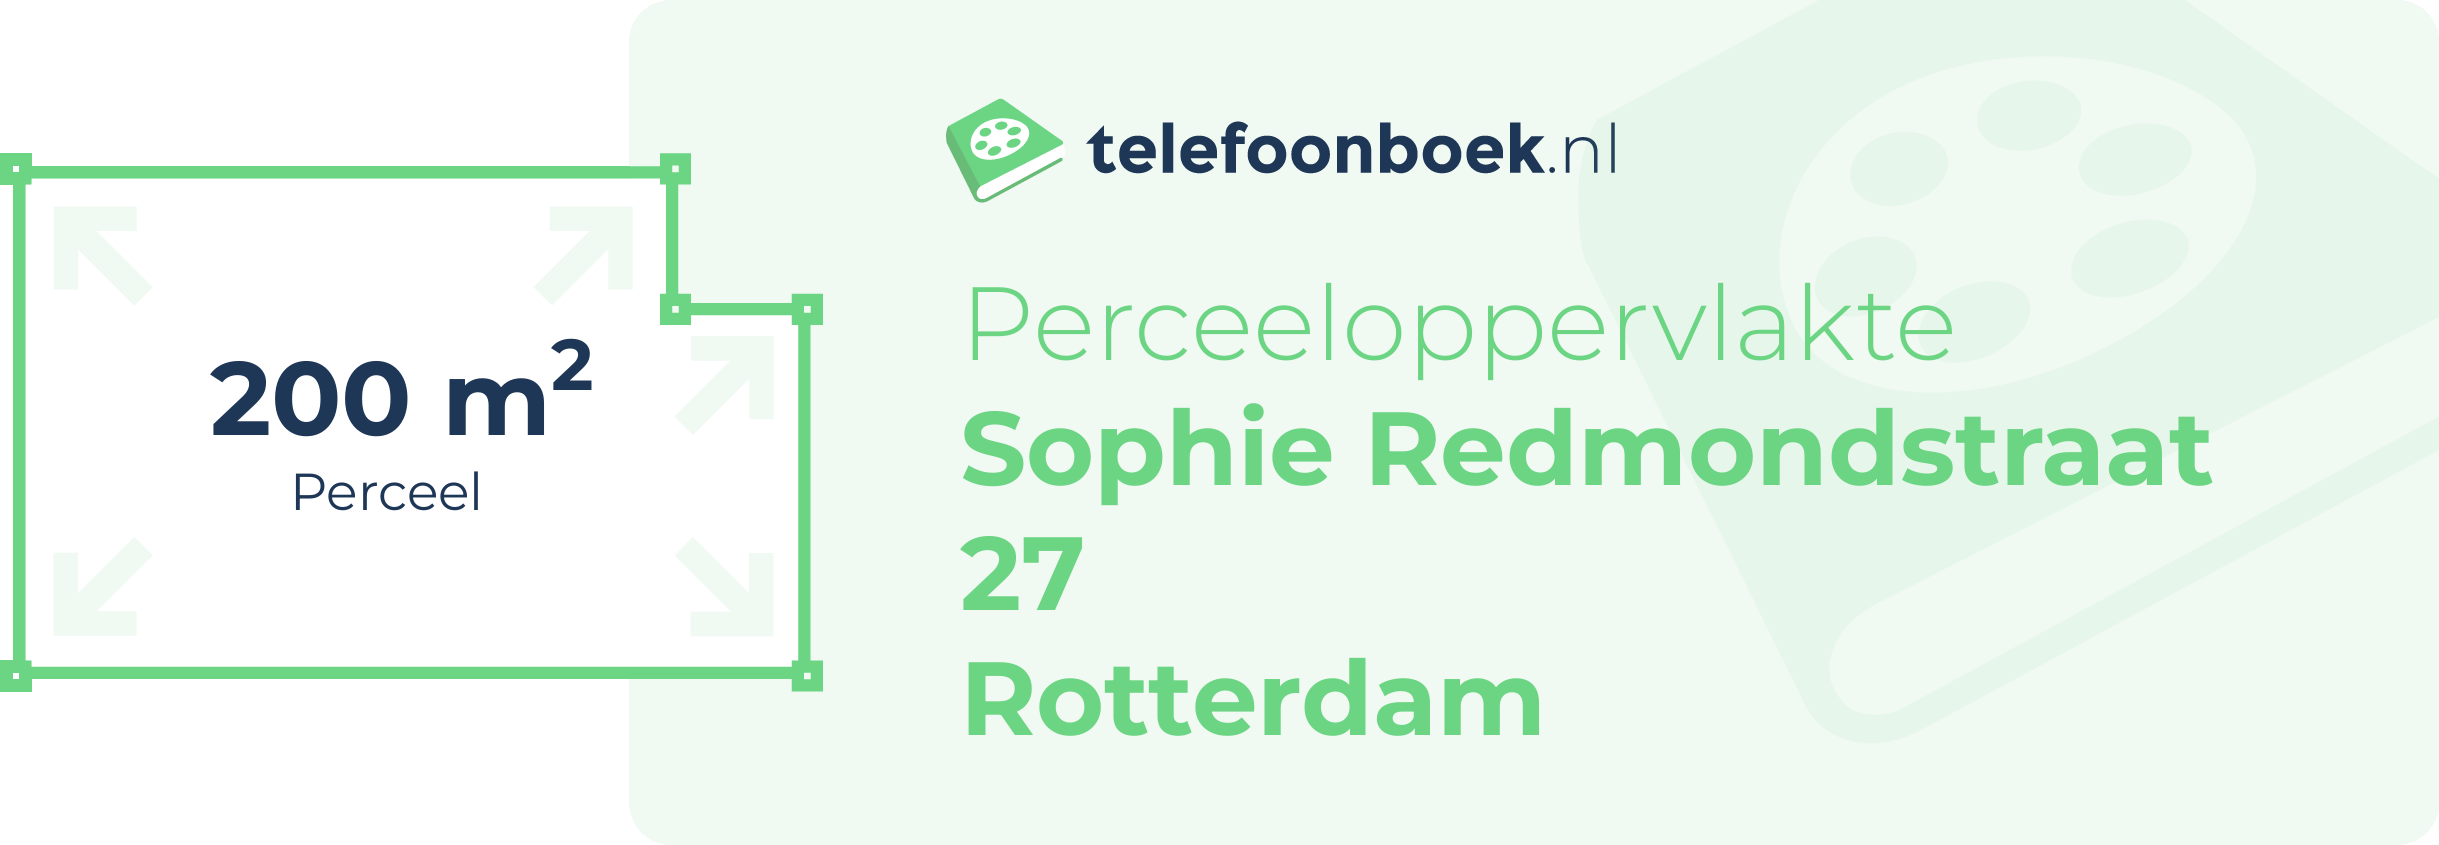 Perceeloppervlakte Sophie Redmondstraat 27 Rotterdam